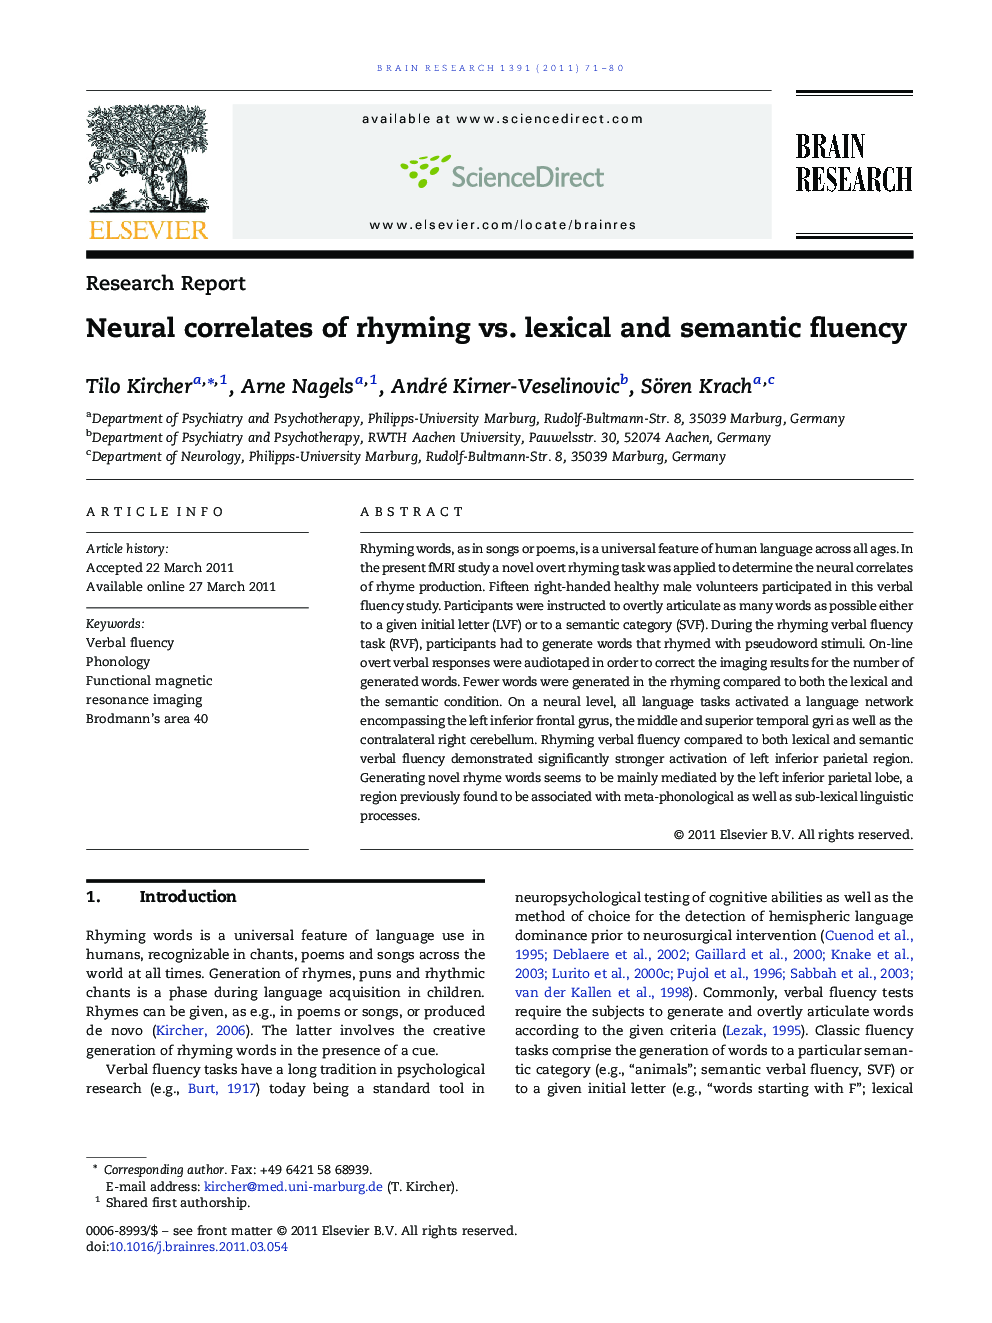 Neural correlates of rhyming vs. lexical and semantic fluency